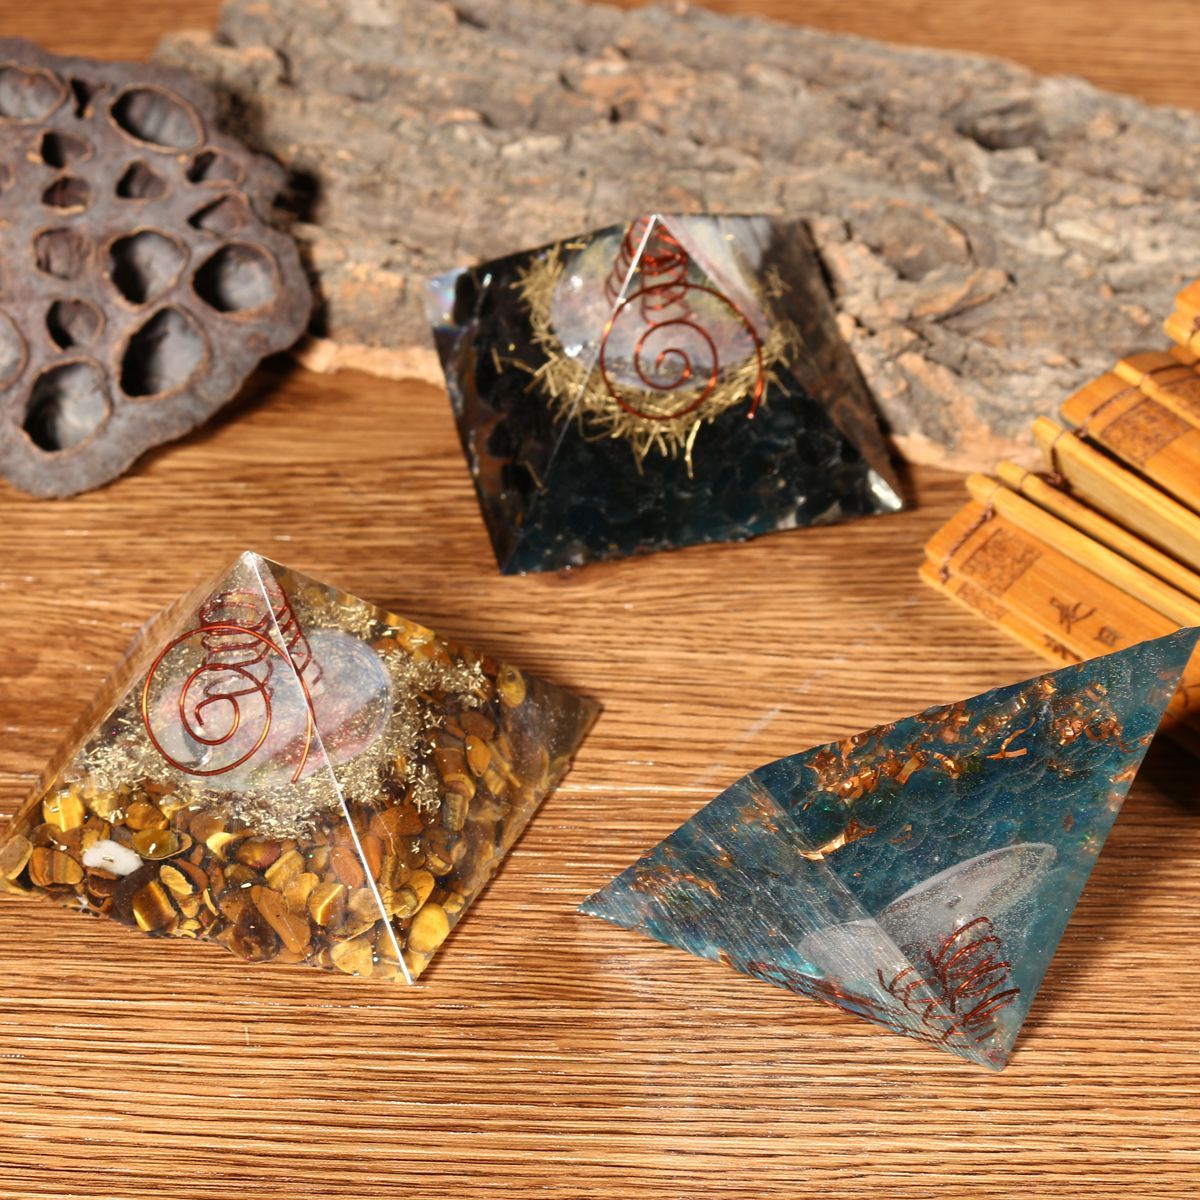 Natural-Pyramid-Crystals-Gemstone-Meditation-Yoga-Healing-Energy-Stone-70-75mm-1537790